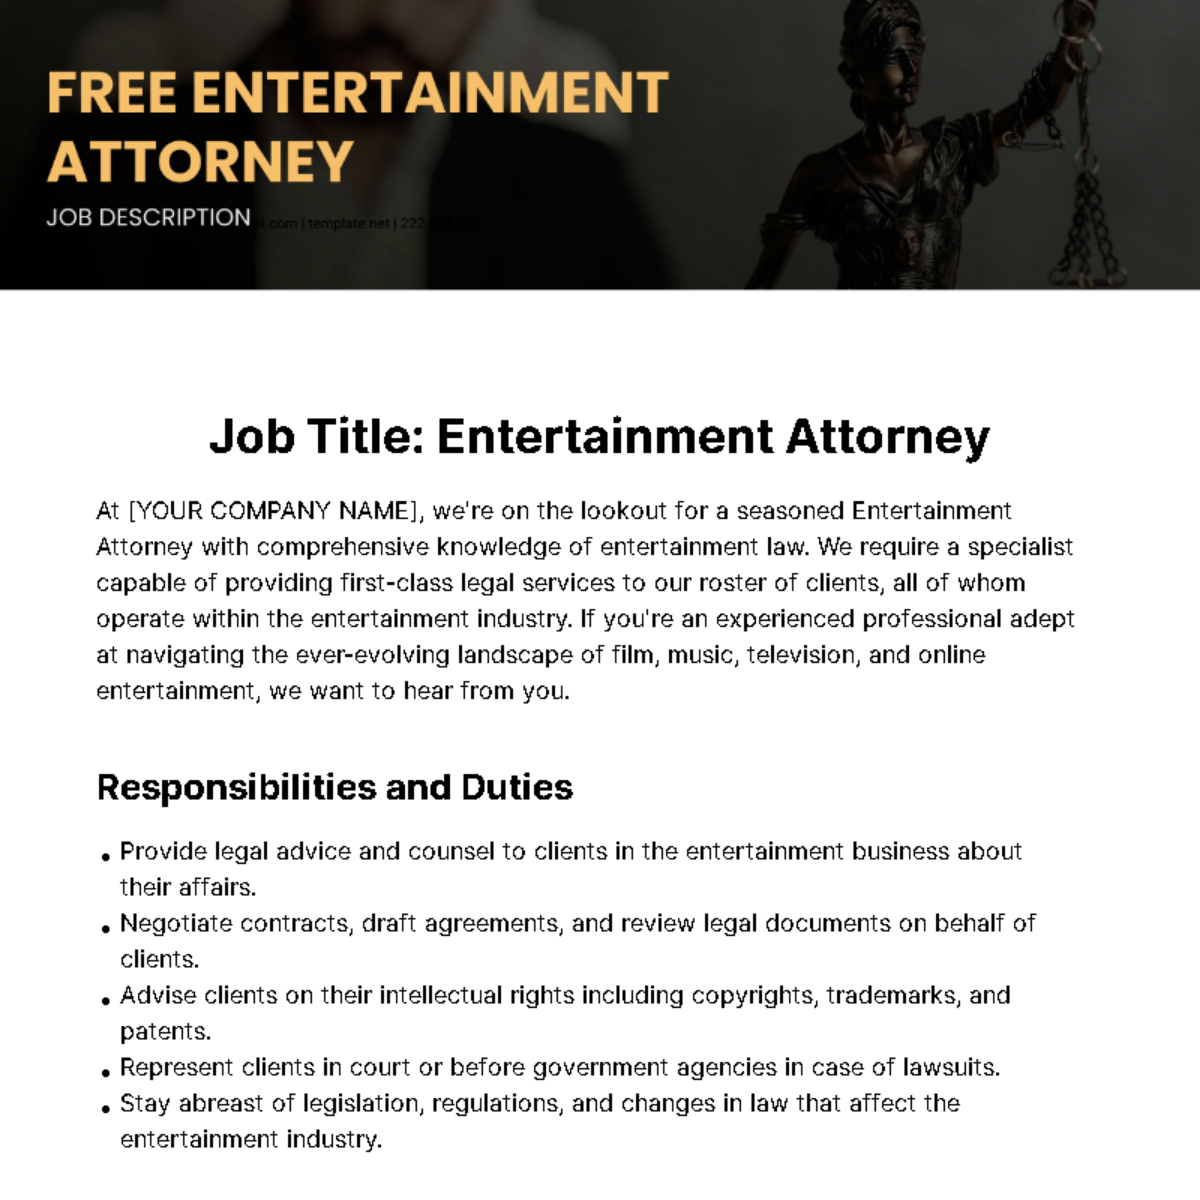 Free Entertainment Attorney Job Description Template